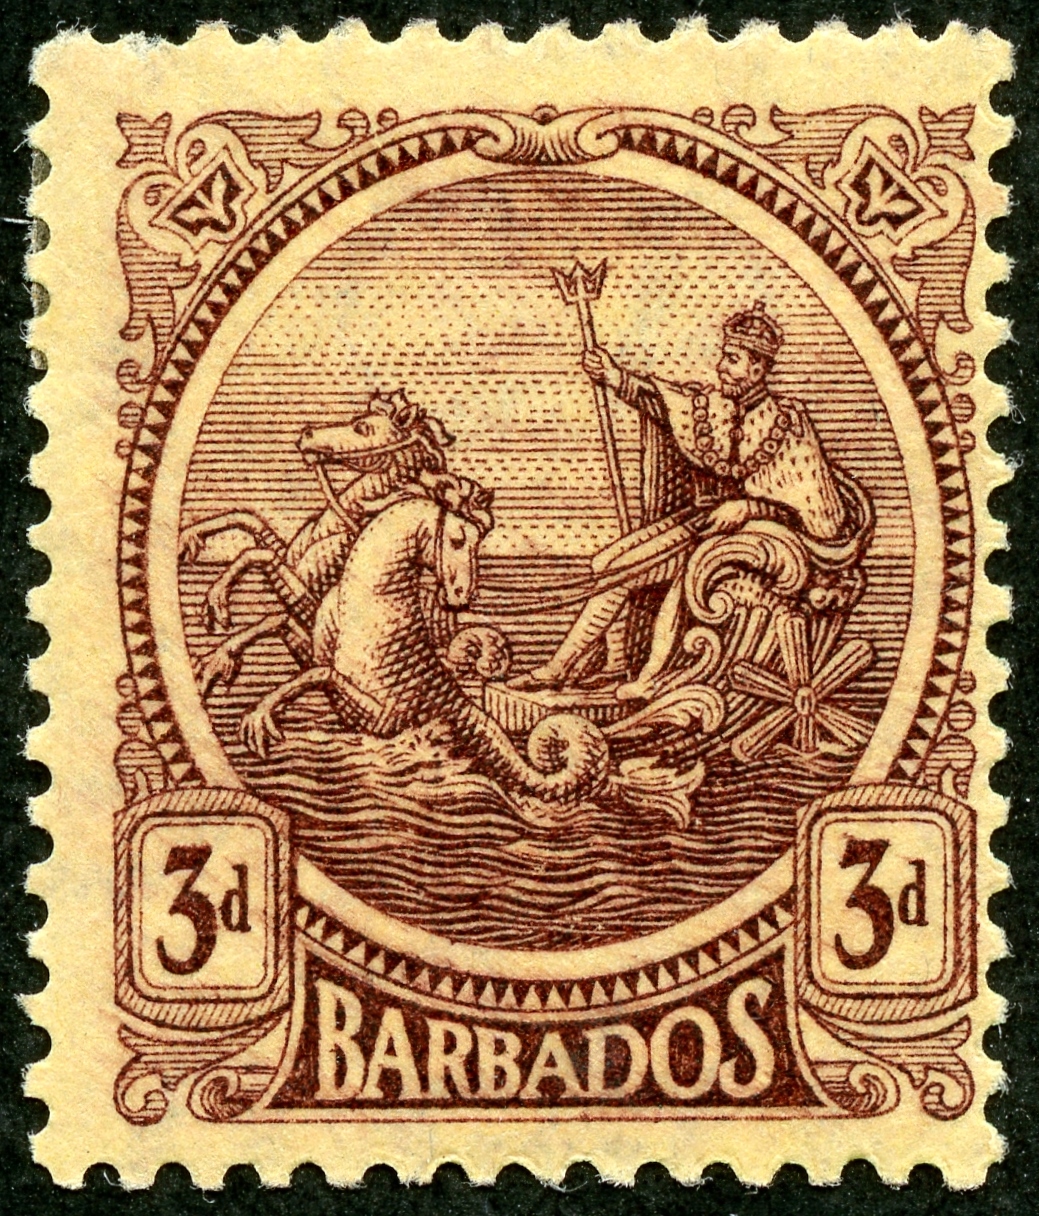 Дам гватемалу и два барбадоса. Марка Гватемала и Барбадоса. Марки Гватемалы и Барбадоса почтовые. Барбадос марка Почтовая. Марка с изображением Барбадос.